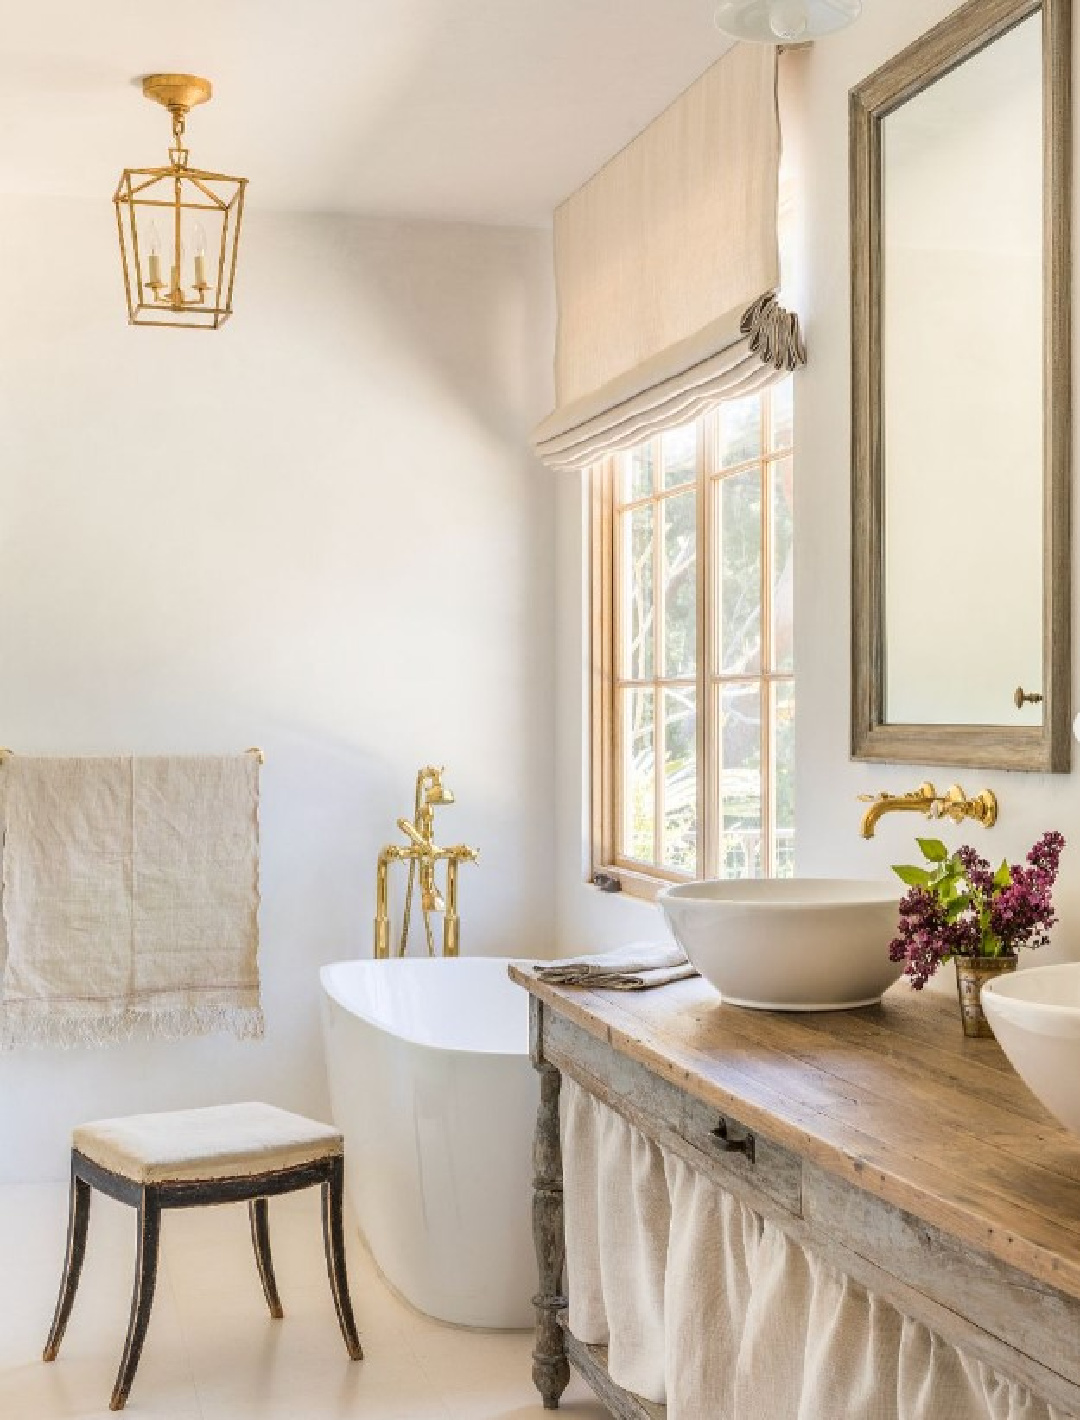 Giannetti Home designed Malibu bathroom with rustic elegance in Luxe Magazine.